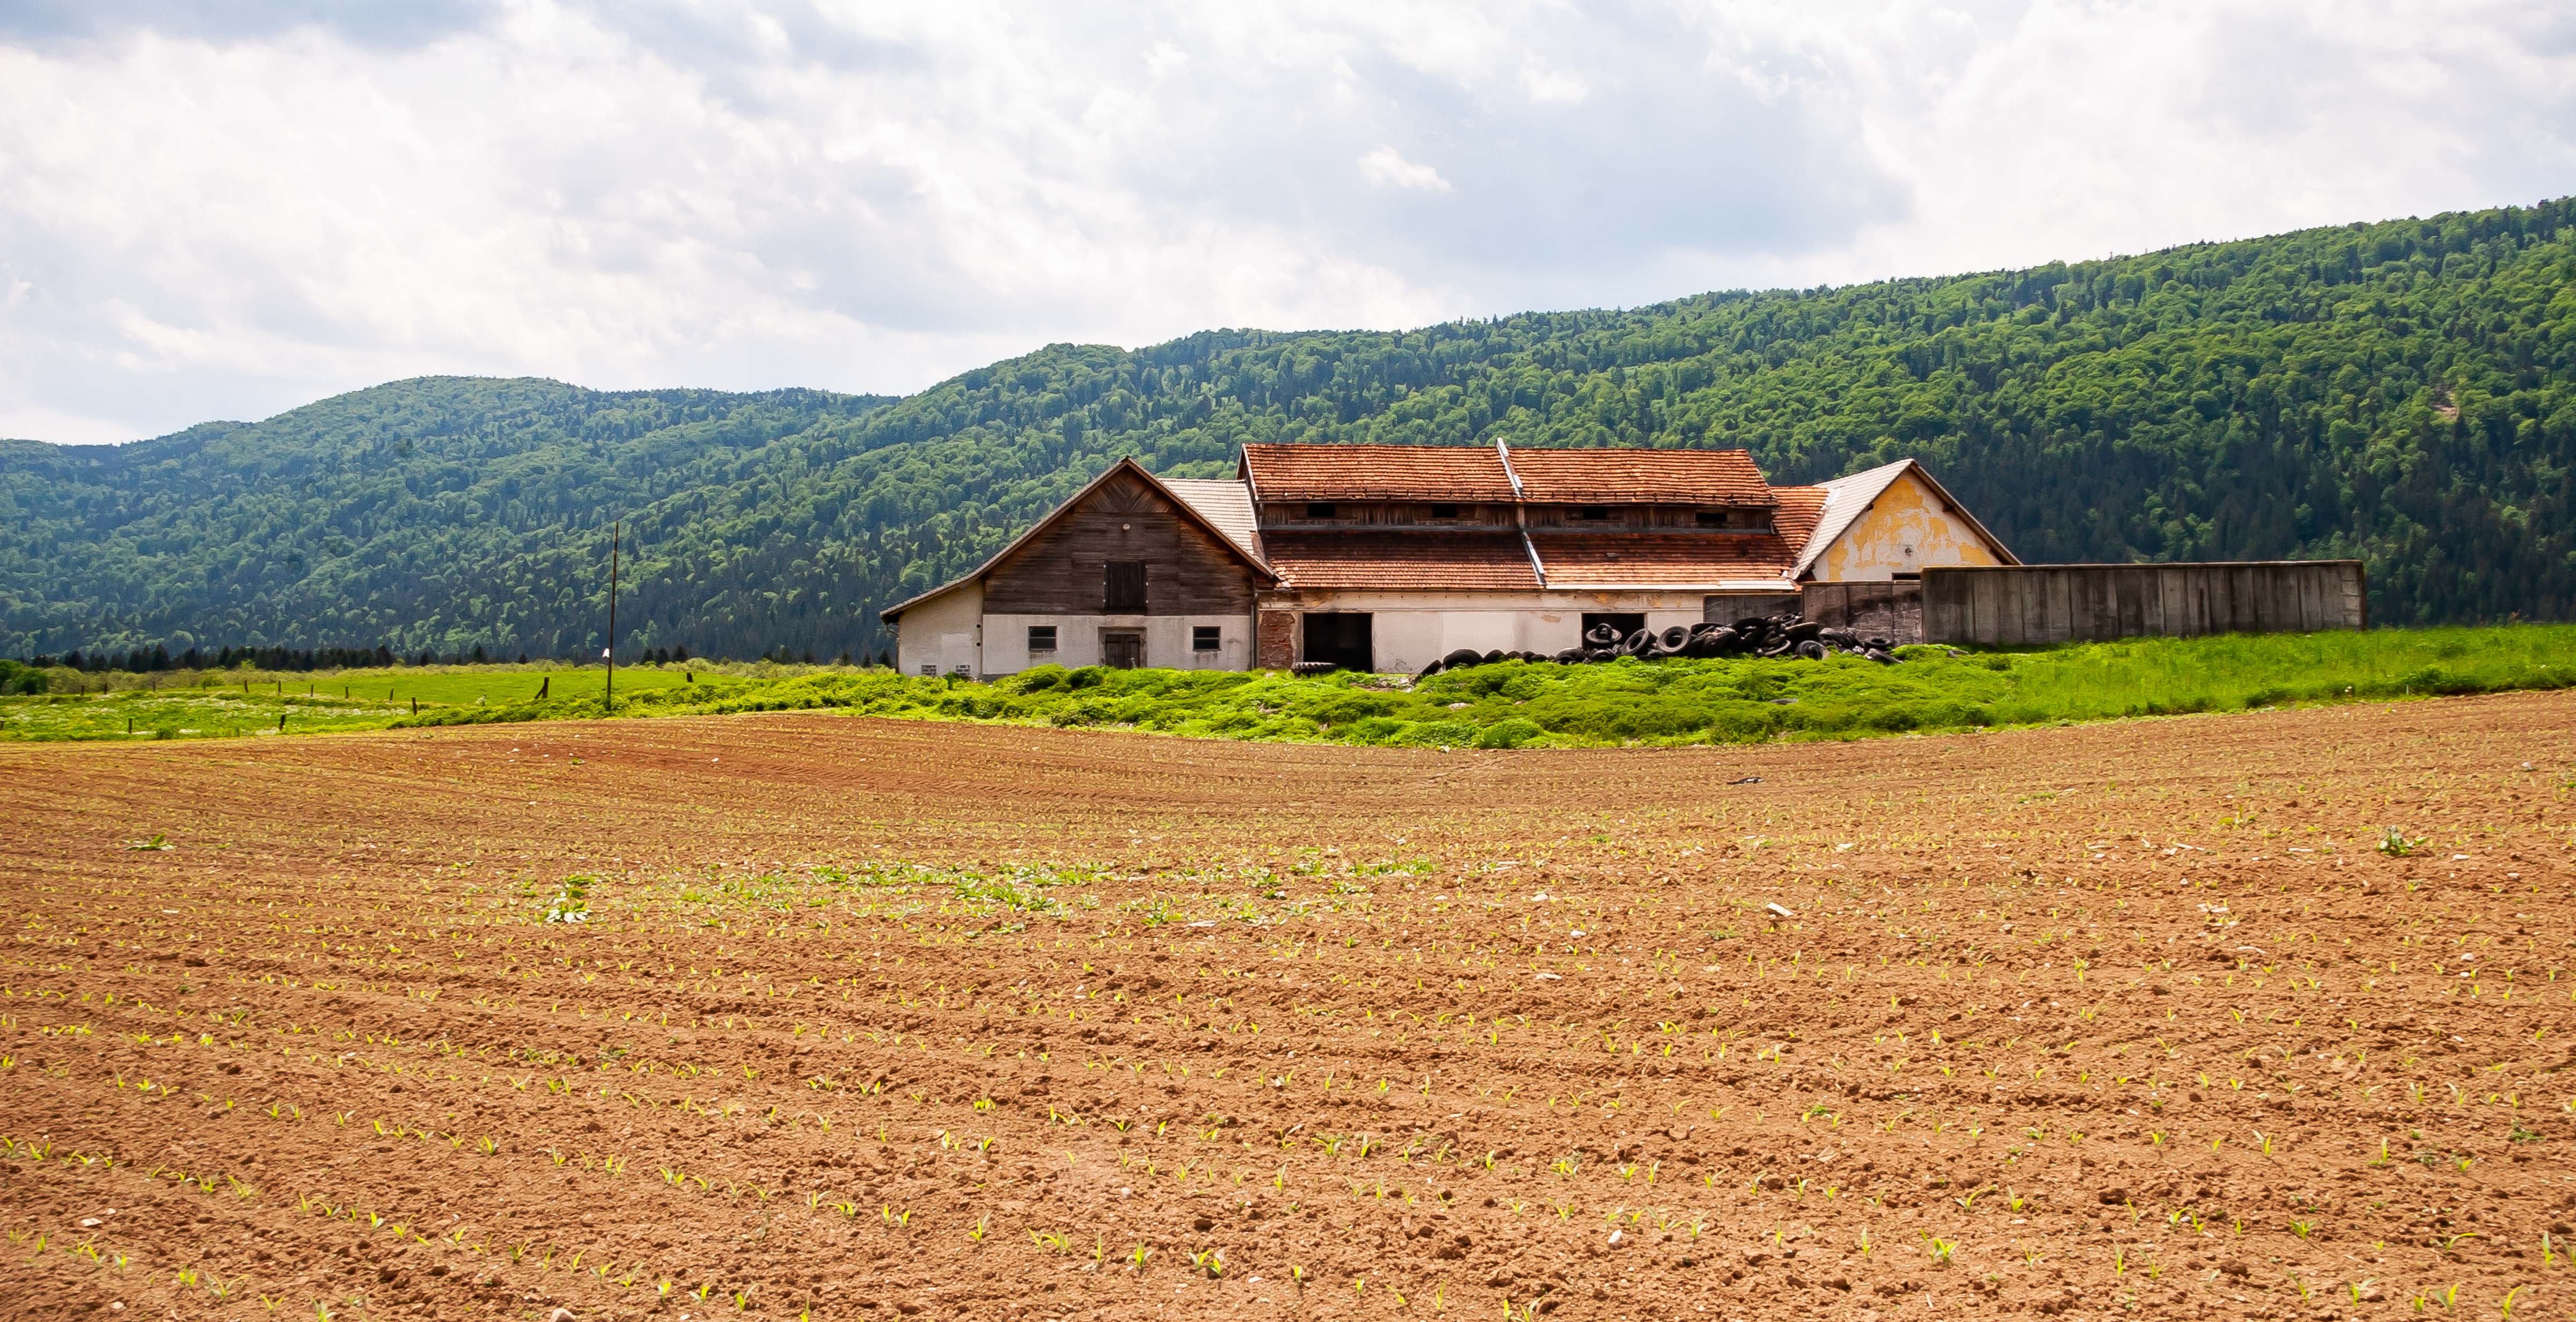 Slovenia, Kocevje Prov, Farm, 2006, IMG 7265